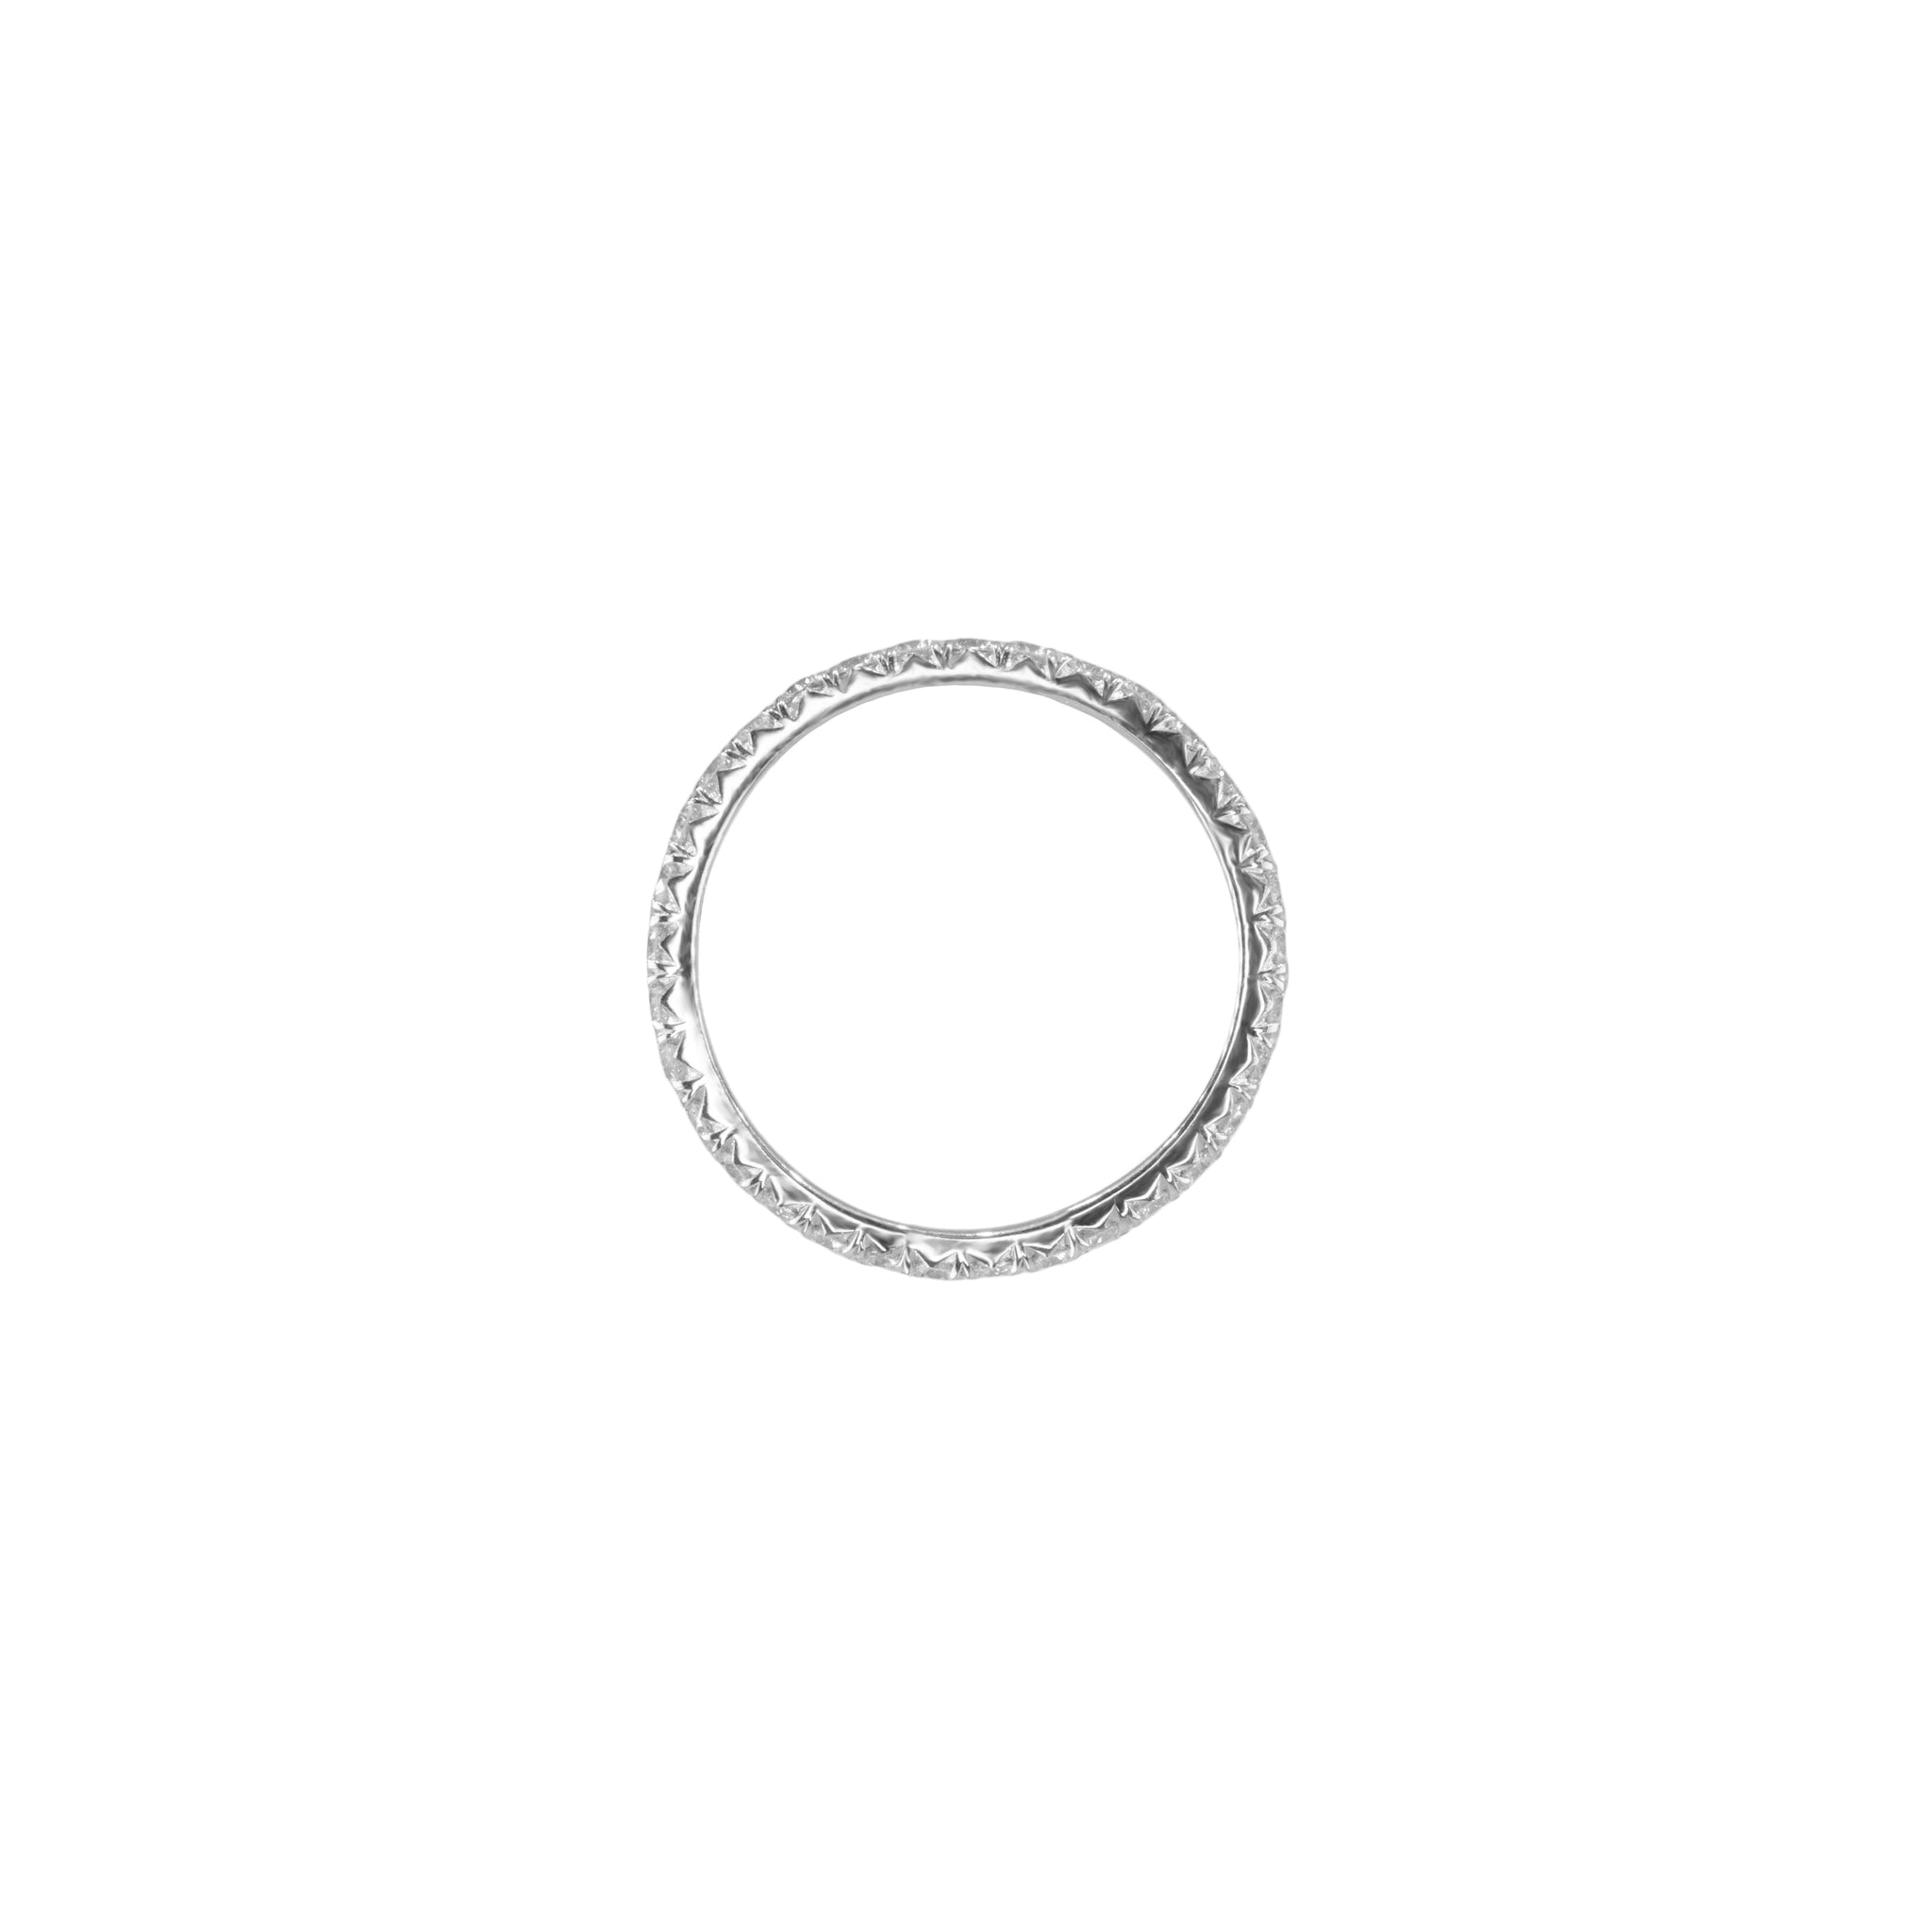 the ètoile platinum eternity ring